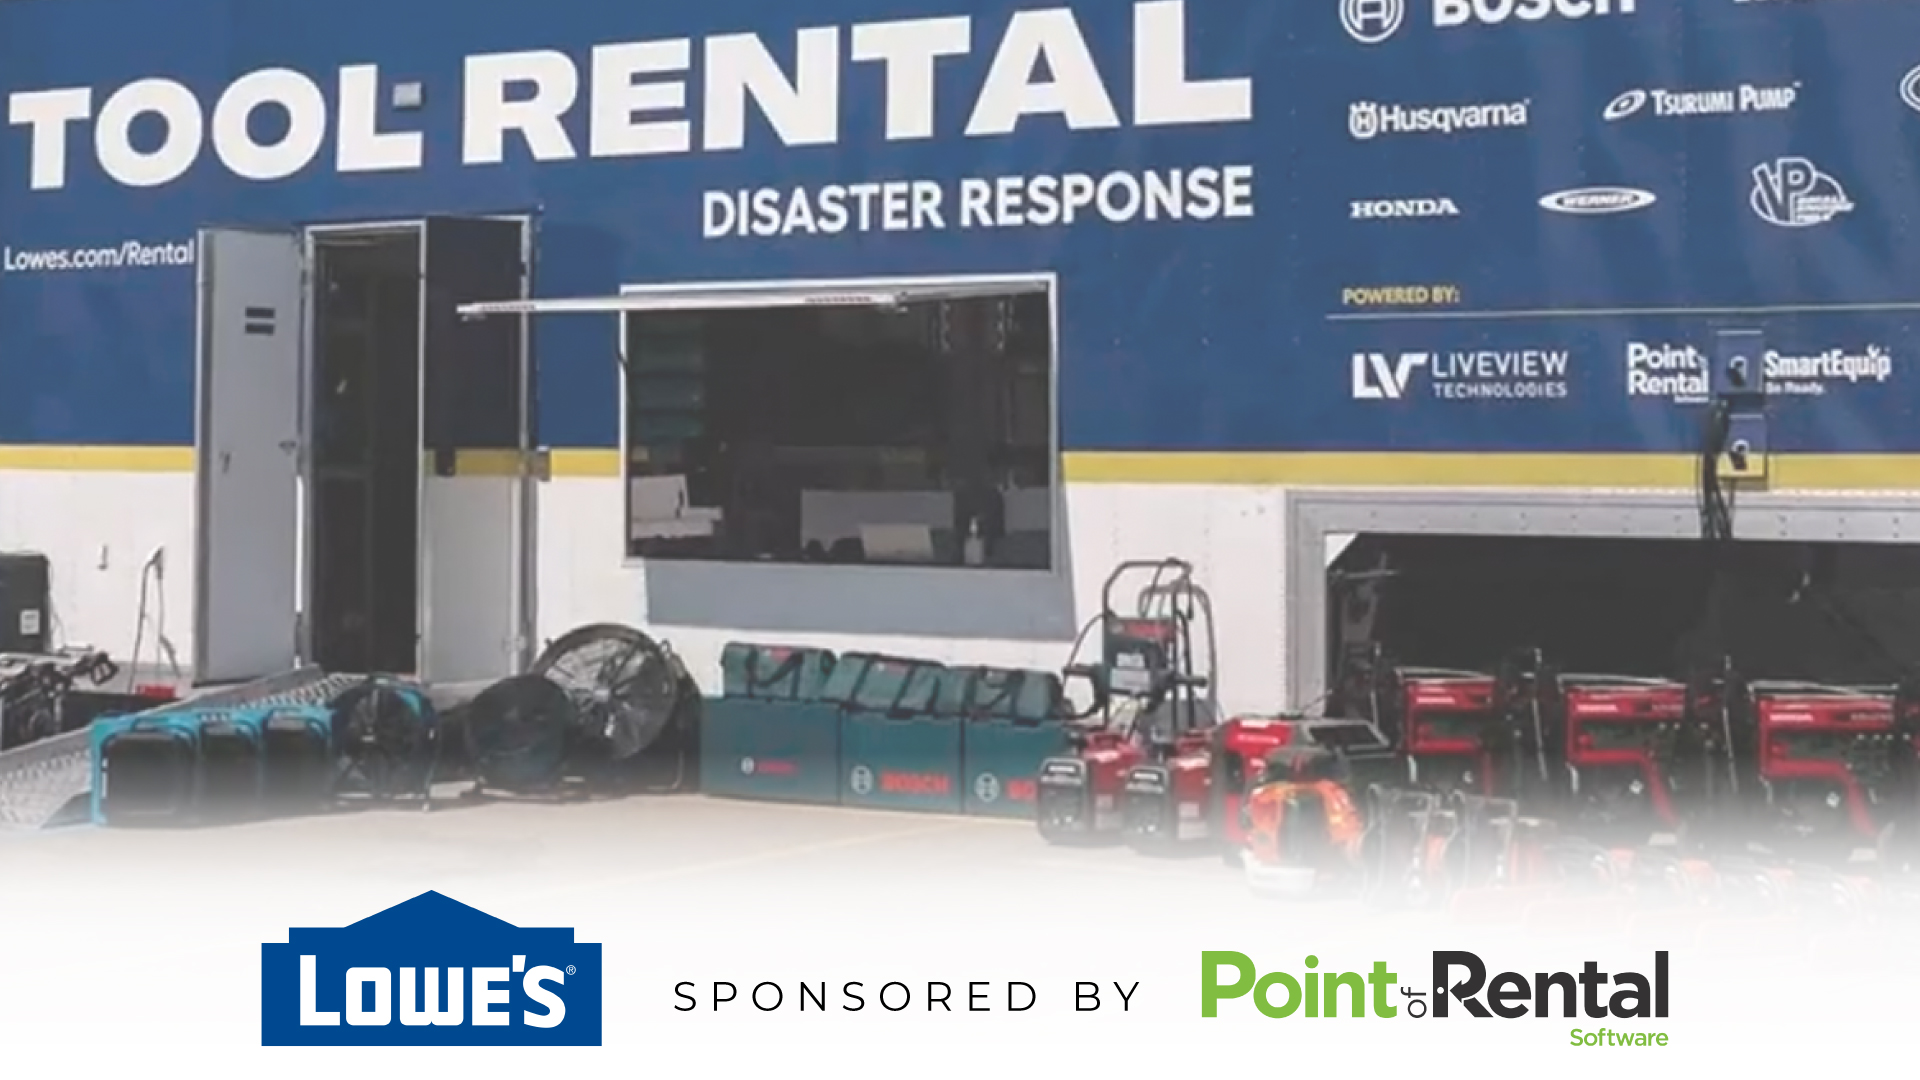 Lowe's Tool Rental Disaster Response Trailer in Bowling Green, Kentucky